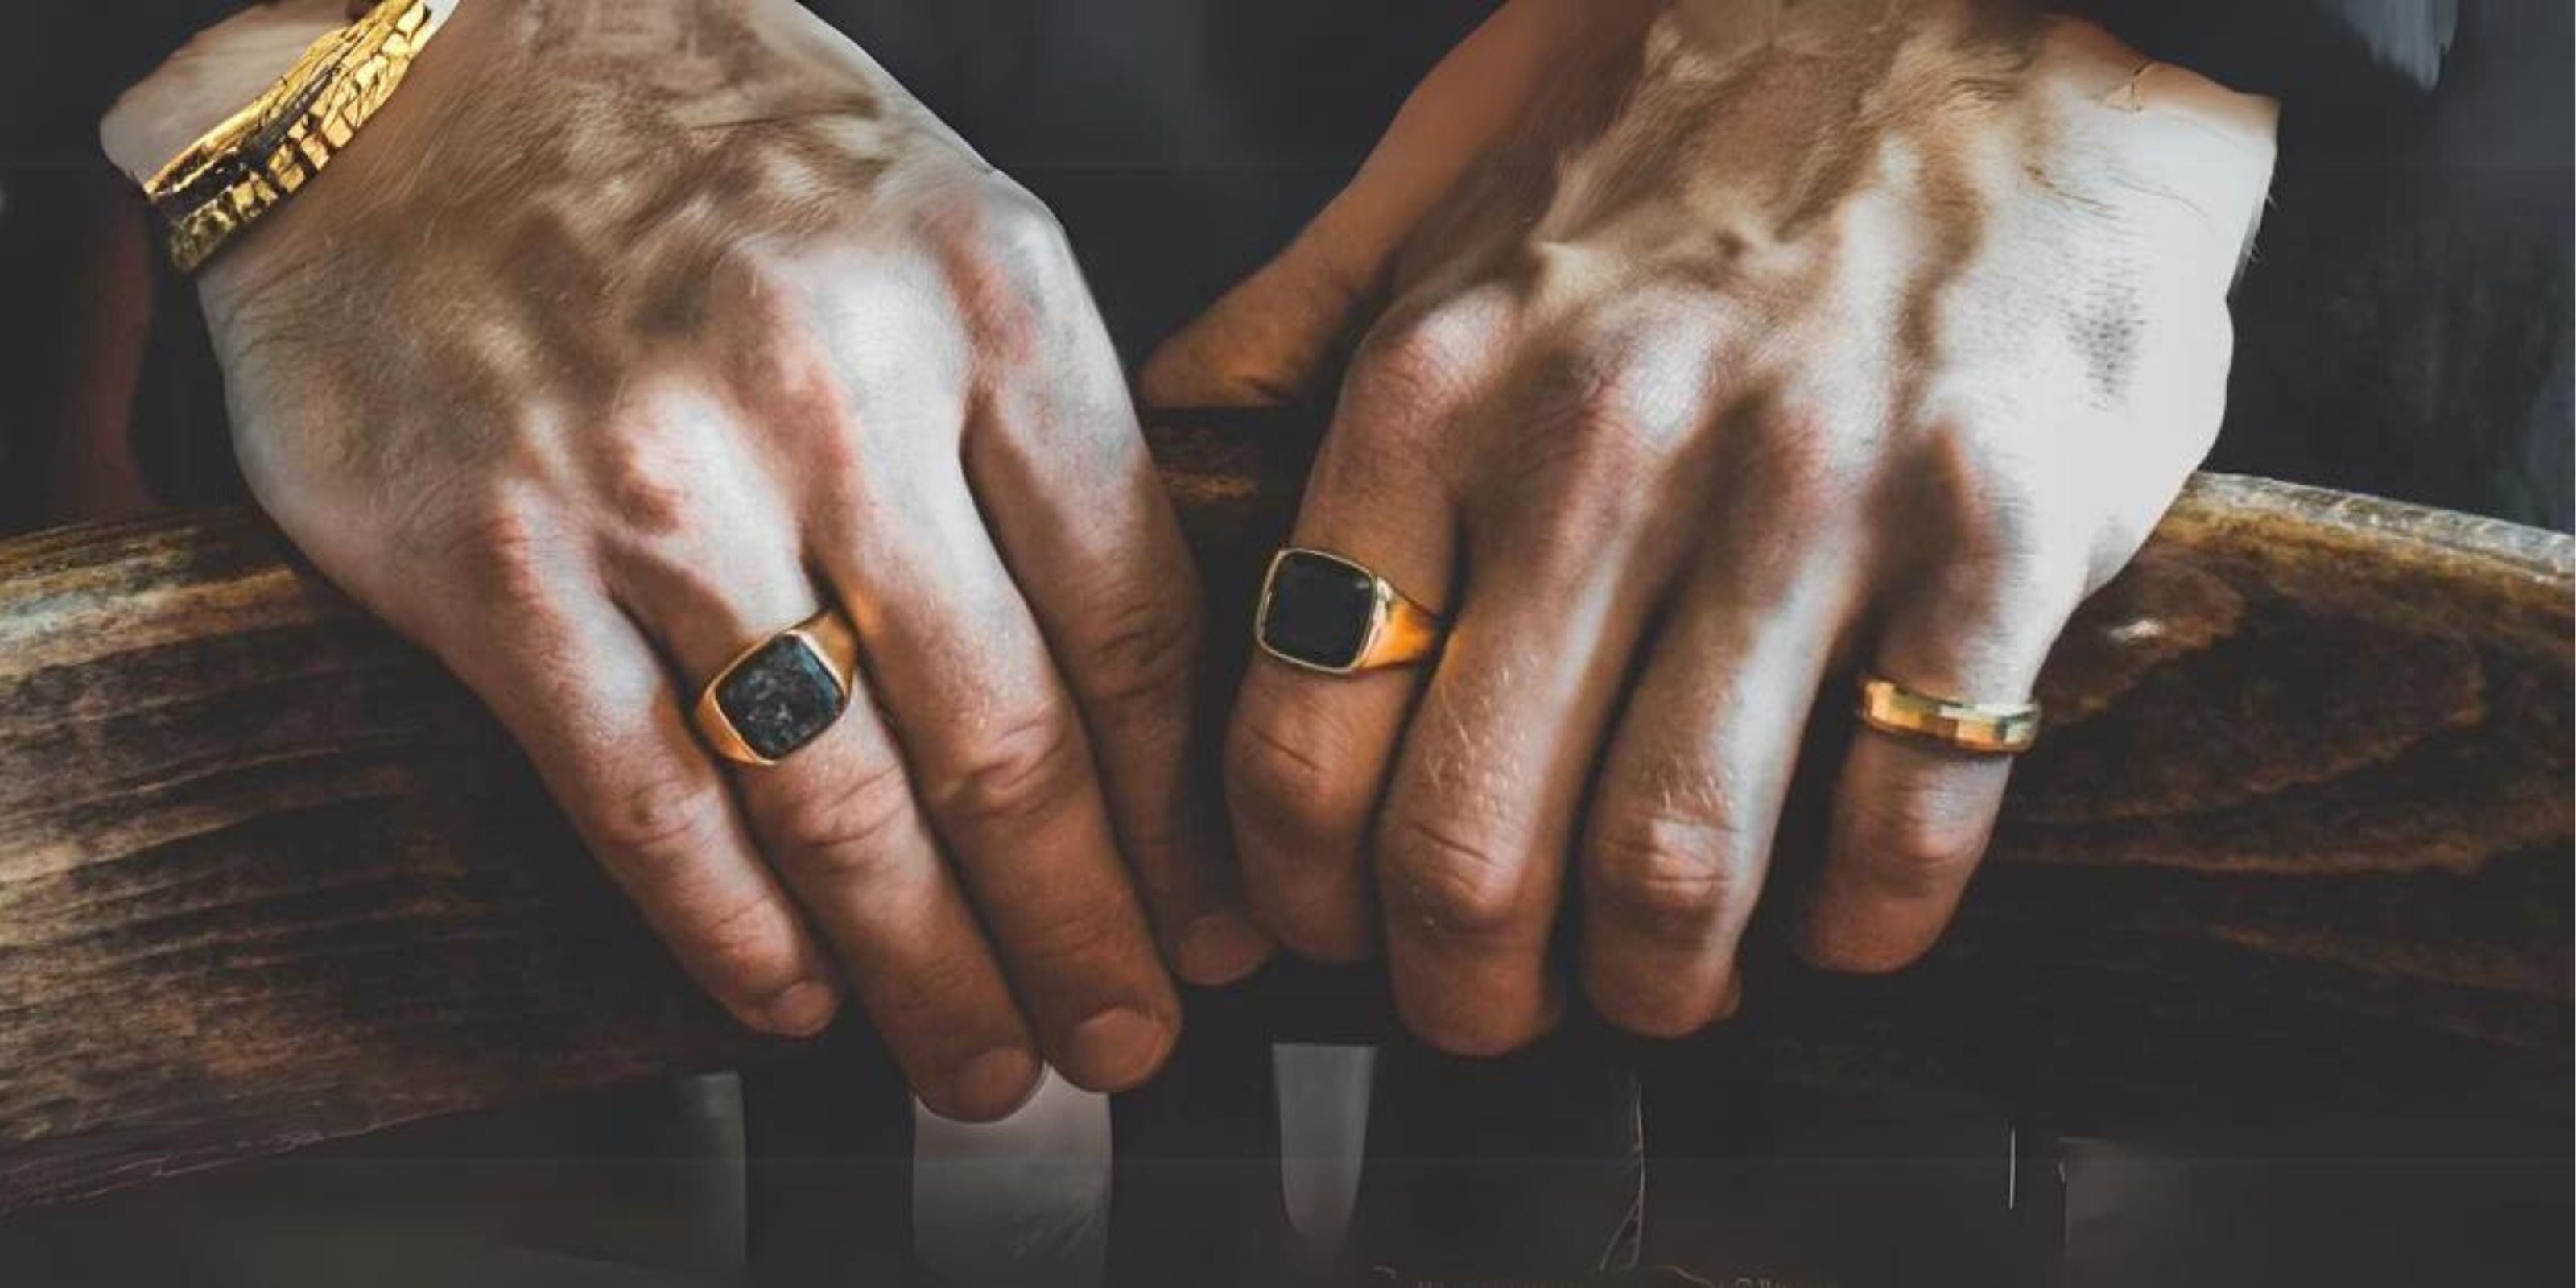 Men's Ring in Brushed Gold – Mane Apparel